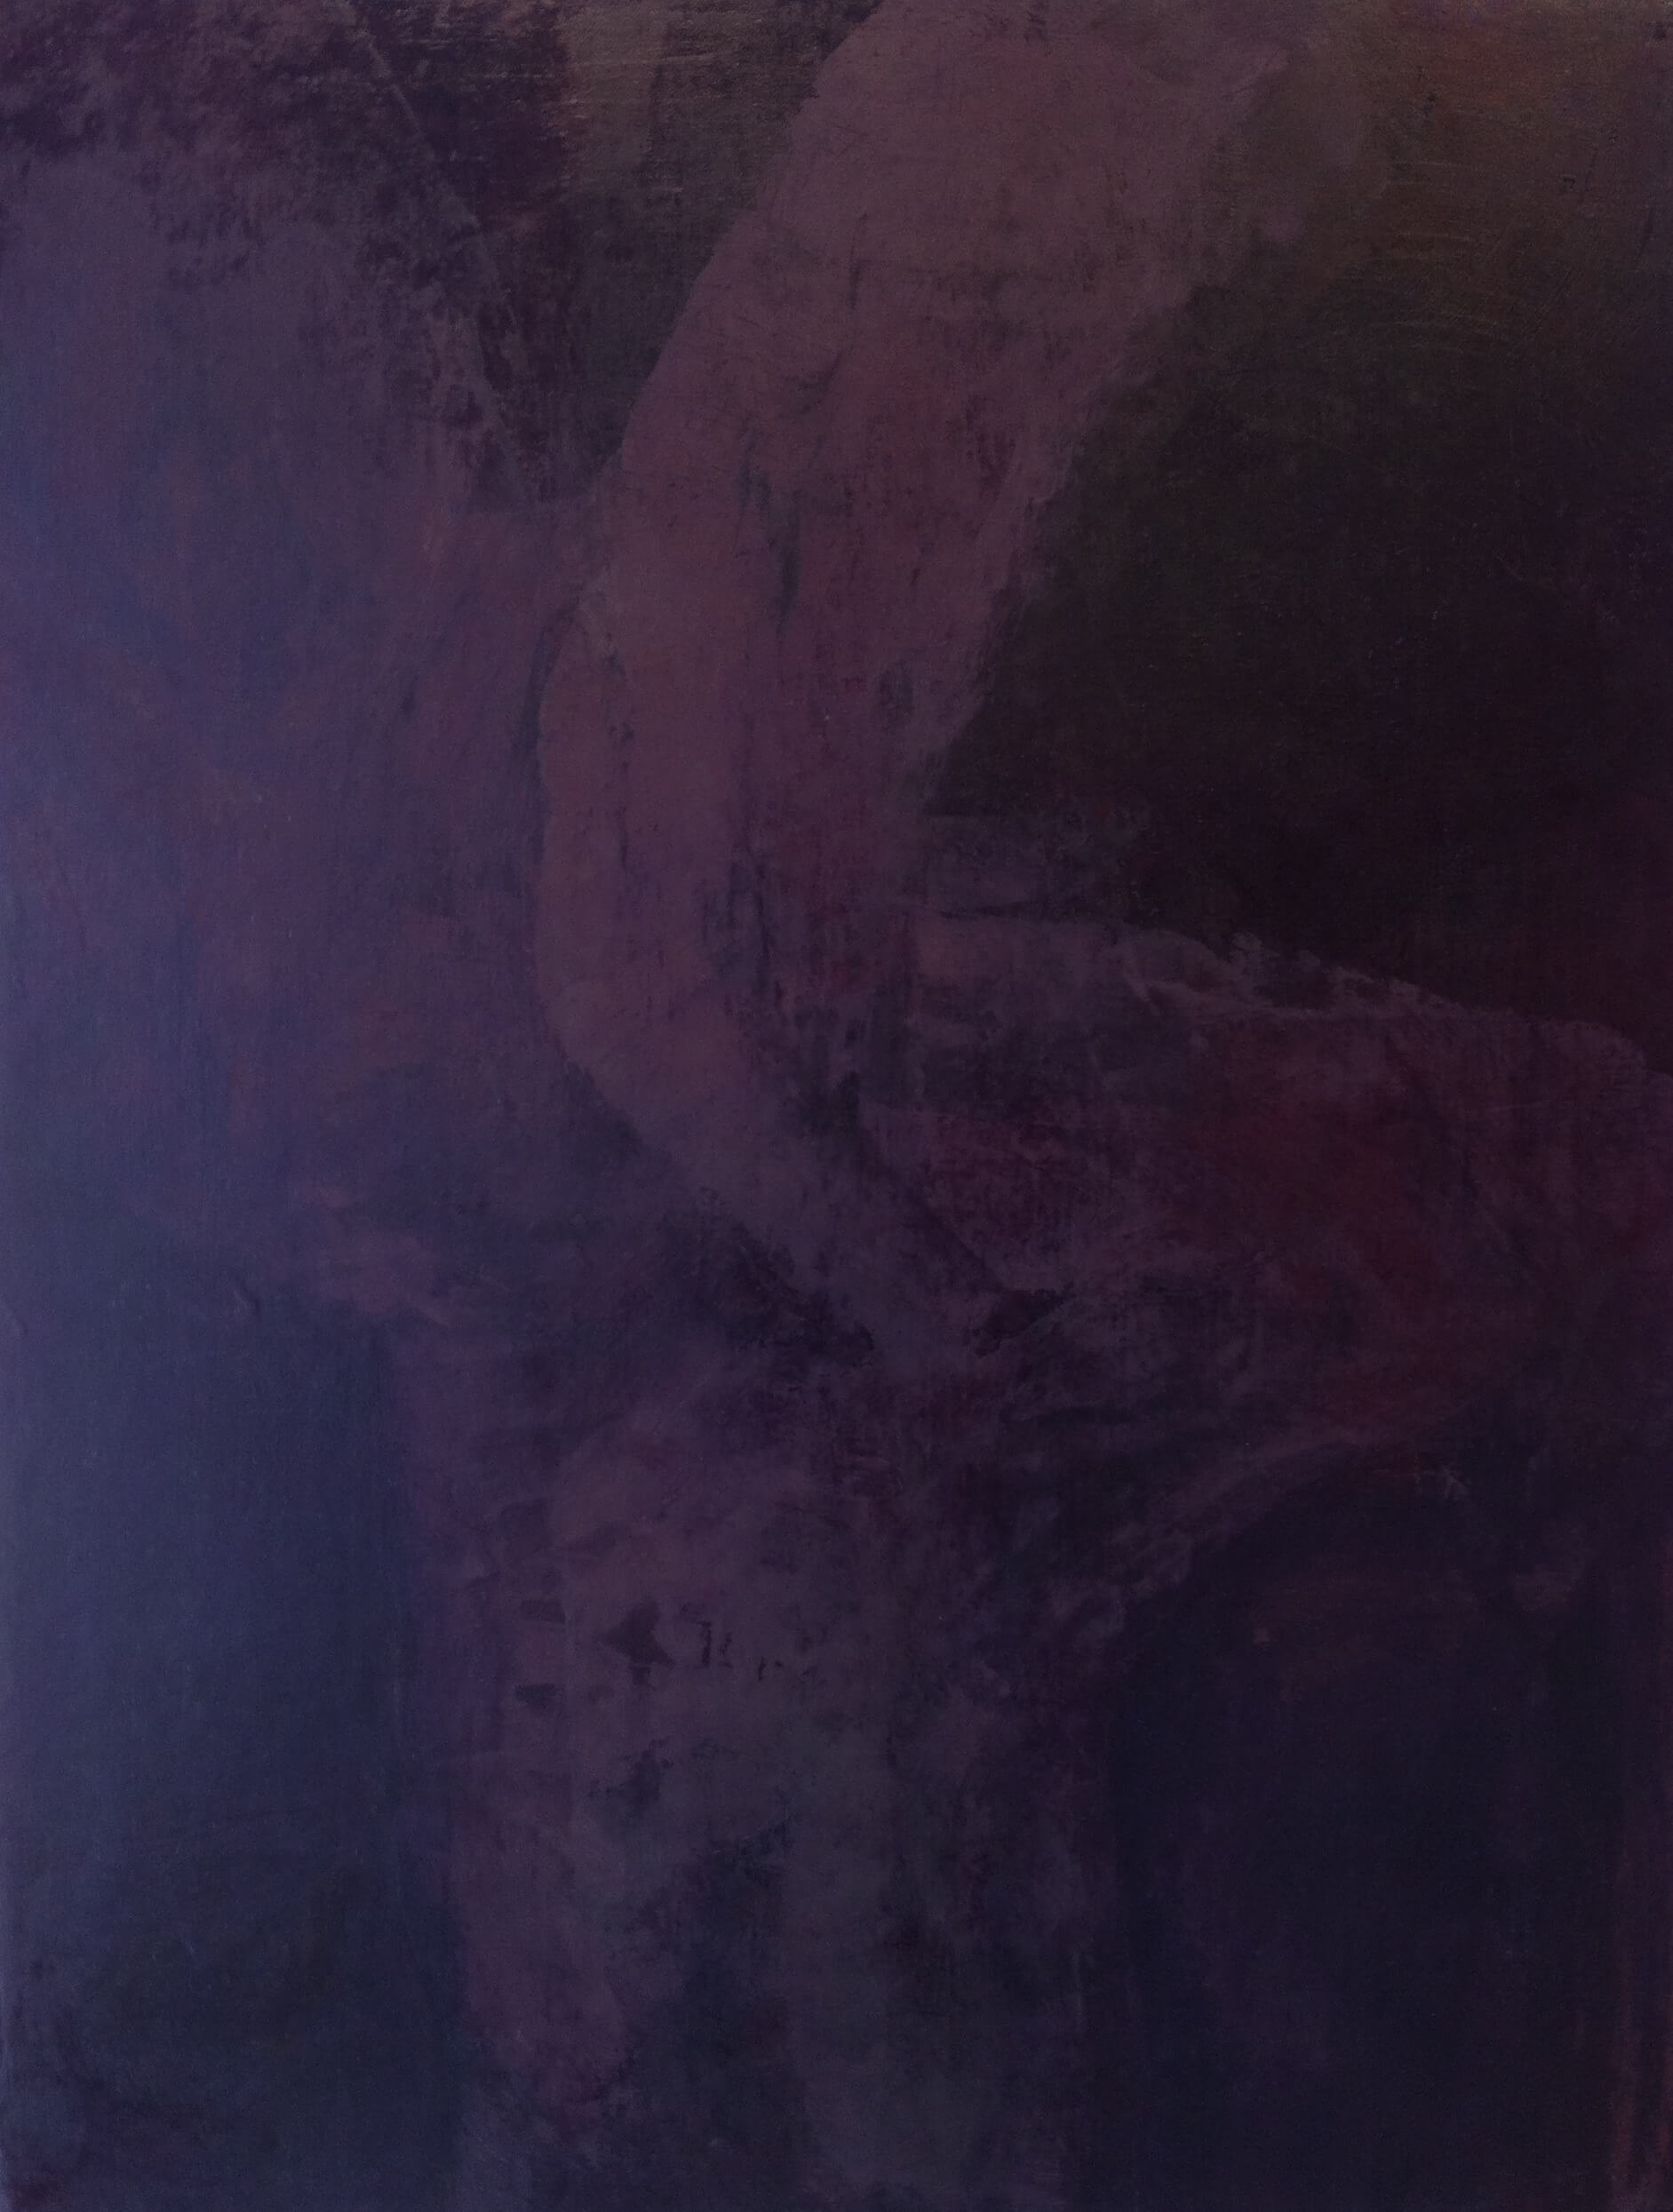 Bill Jensen, Ape Herd VI, 2002-03, oil on linen, 26 1/4 x 20 1/4 inches, Collection of Russell Lewczuk Jensen